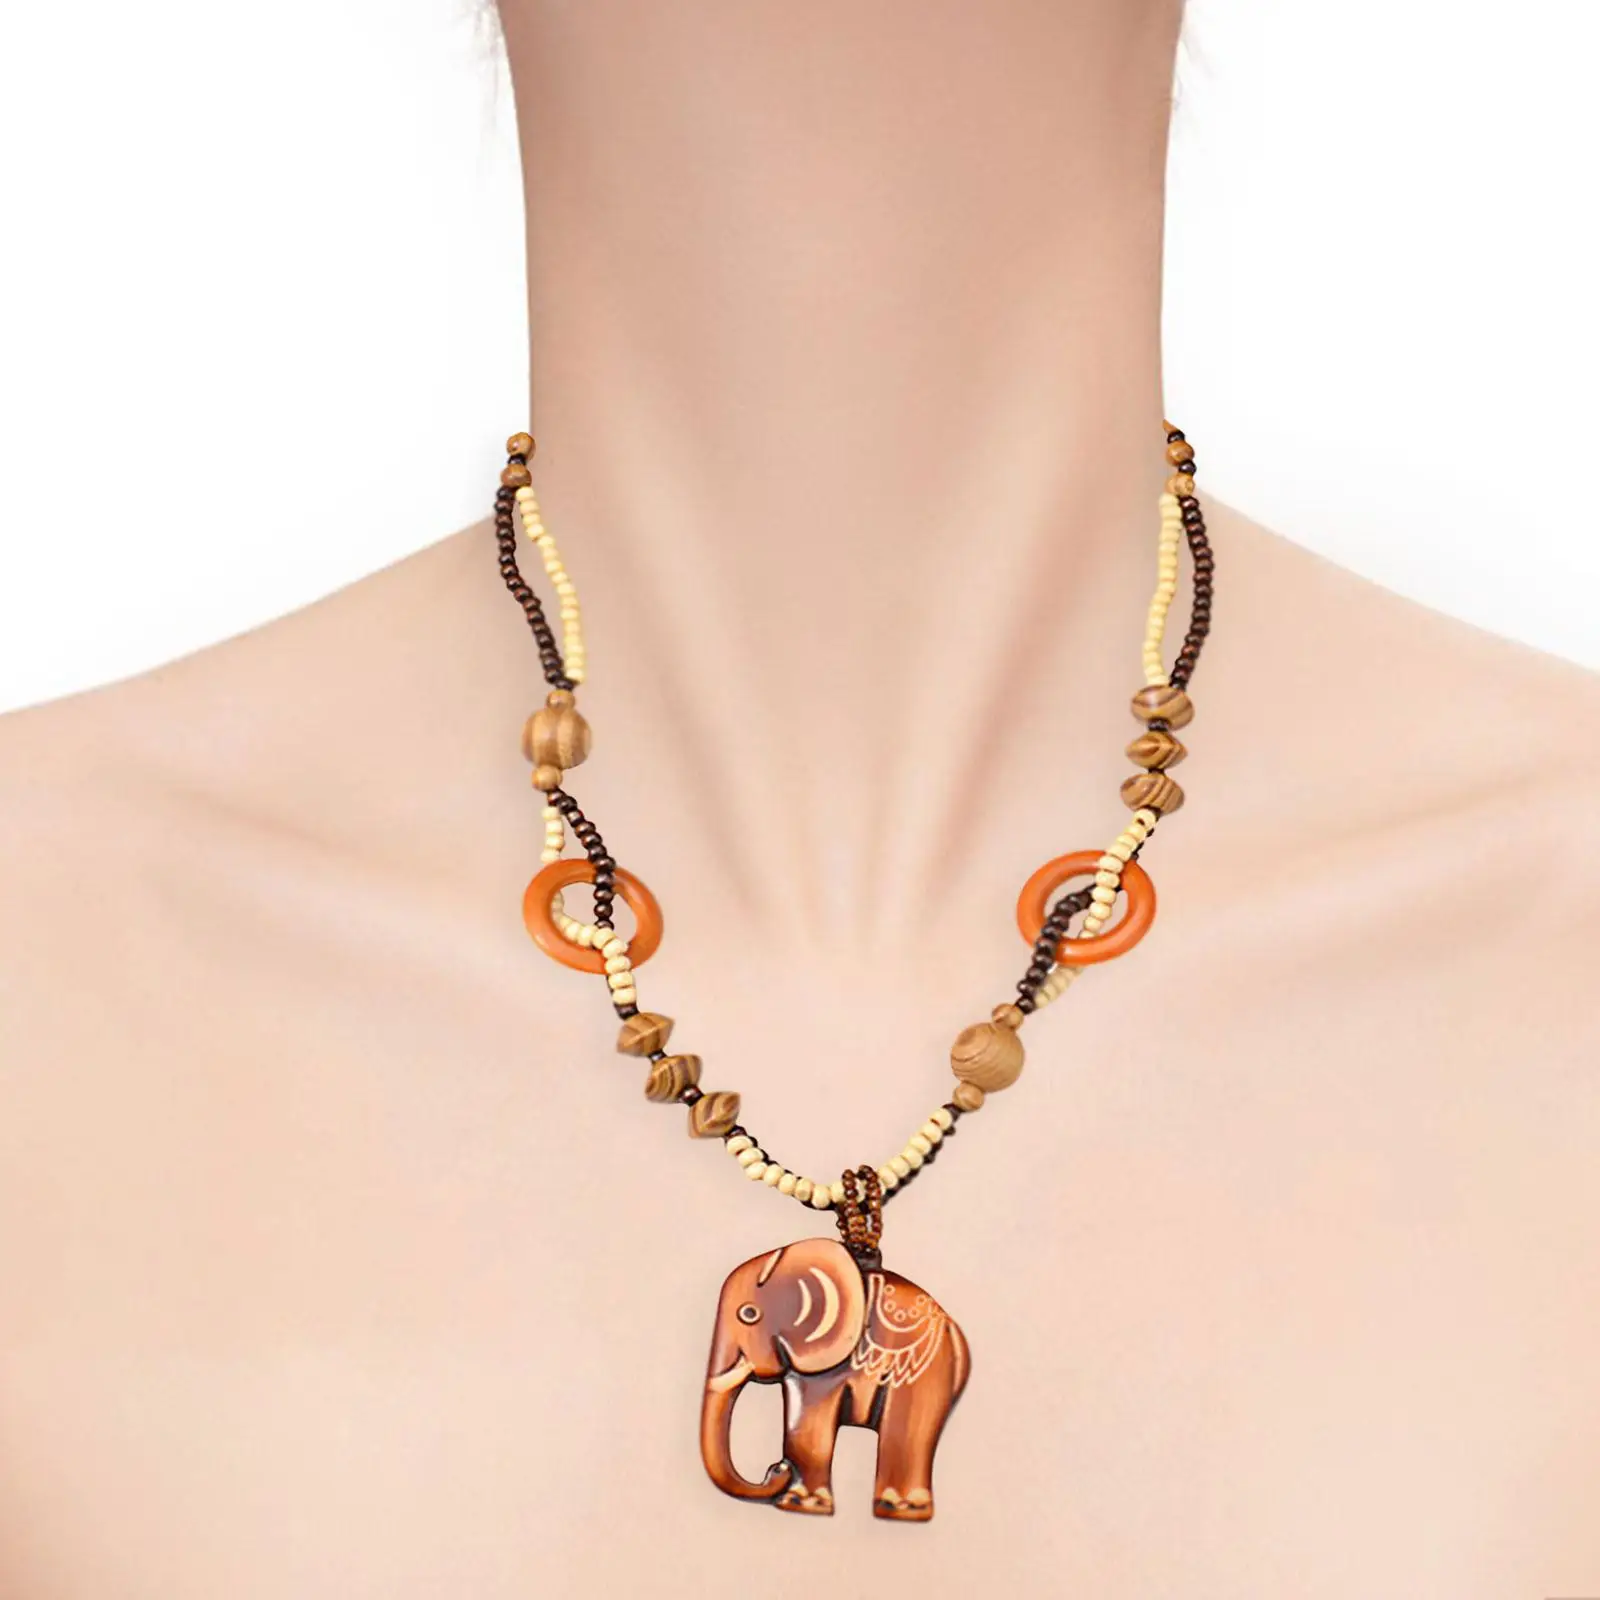 Elephant Pendant Necklaces Wooden Fashion Jewelry for Men Women Unisex Girls